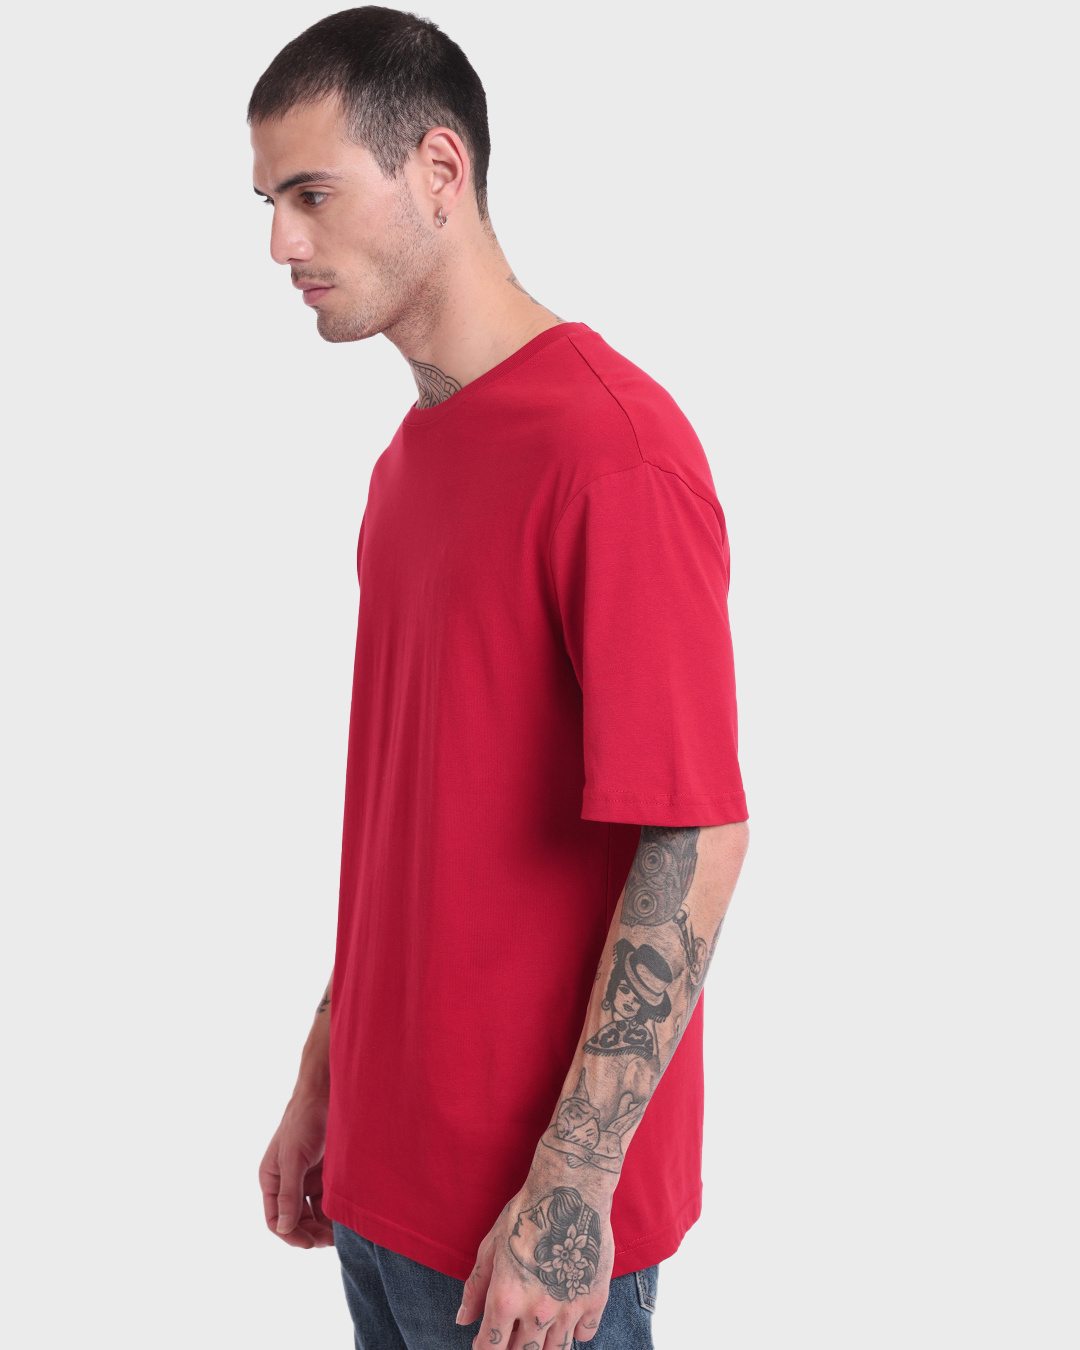 Buy Men's Red Oversized Plus Size T-shirt Online at Bewakoof